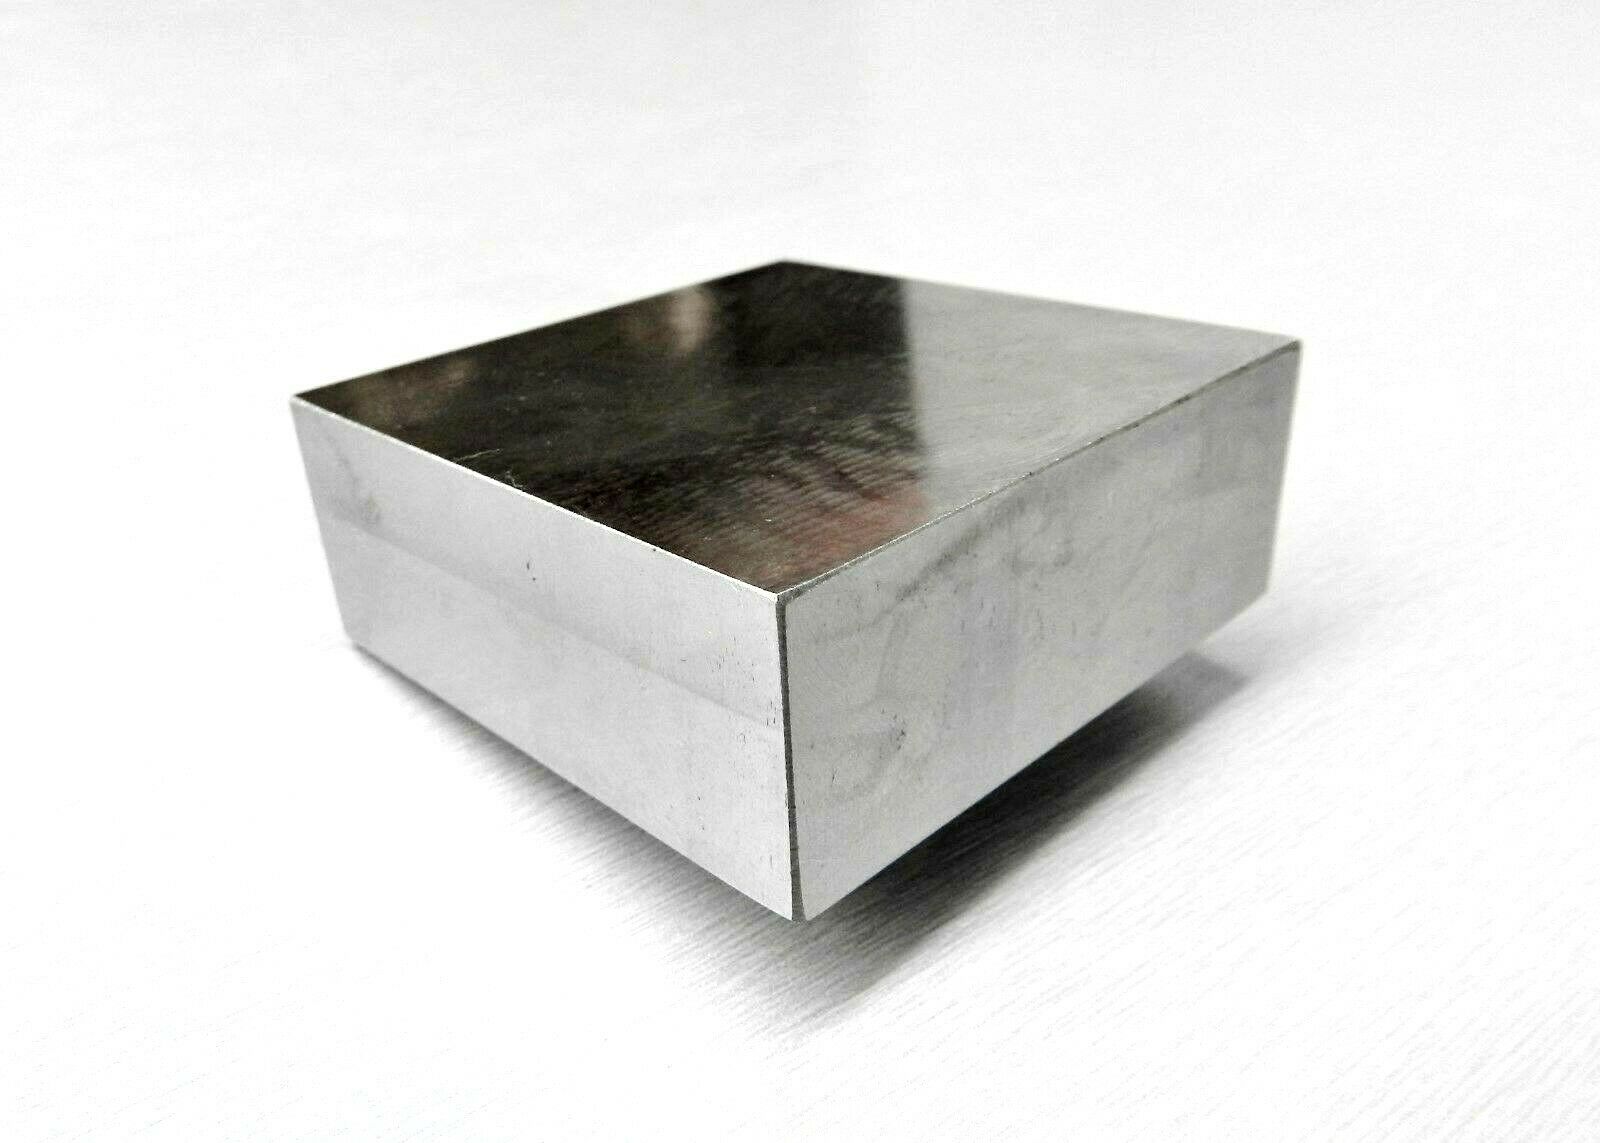 Steel Block Jewelers Steel Bench Block Metal Working Anvil 2.5" Sq. X 1" Thick